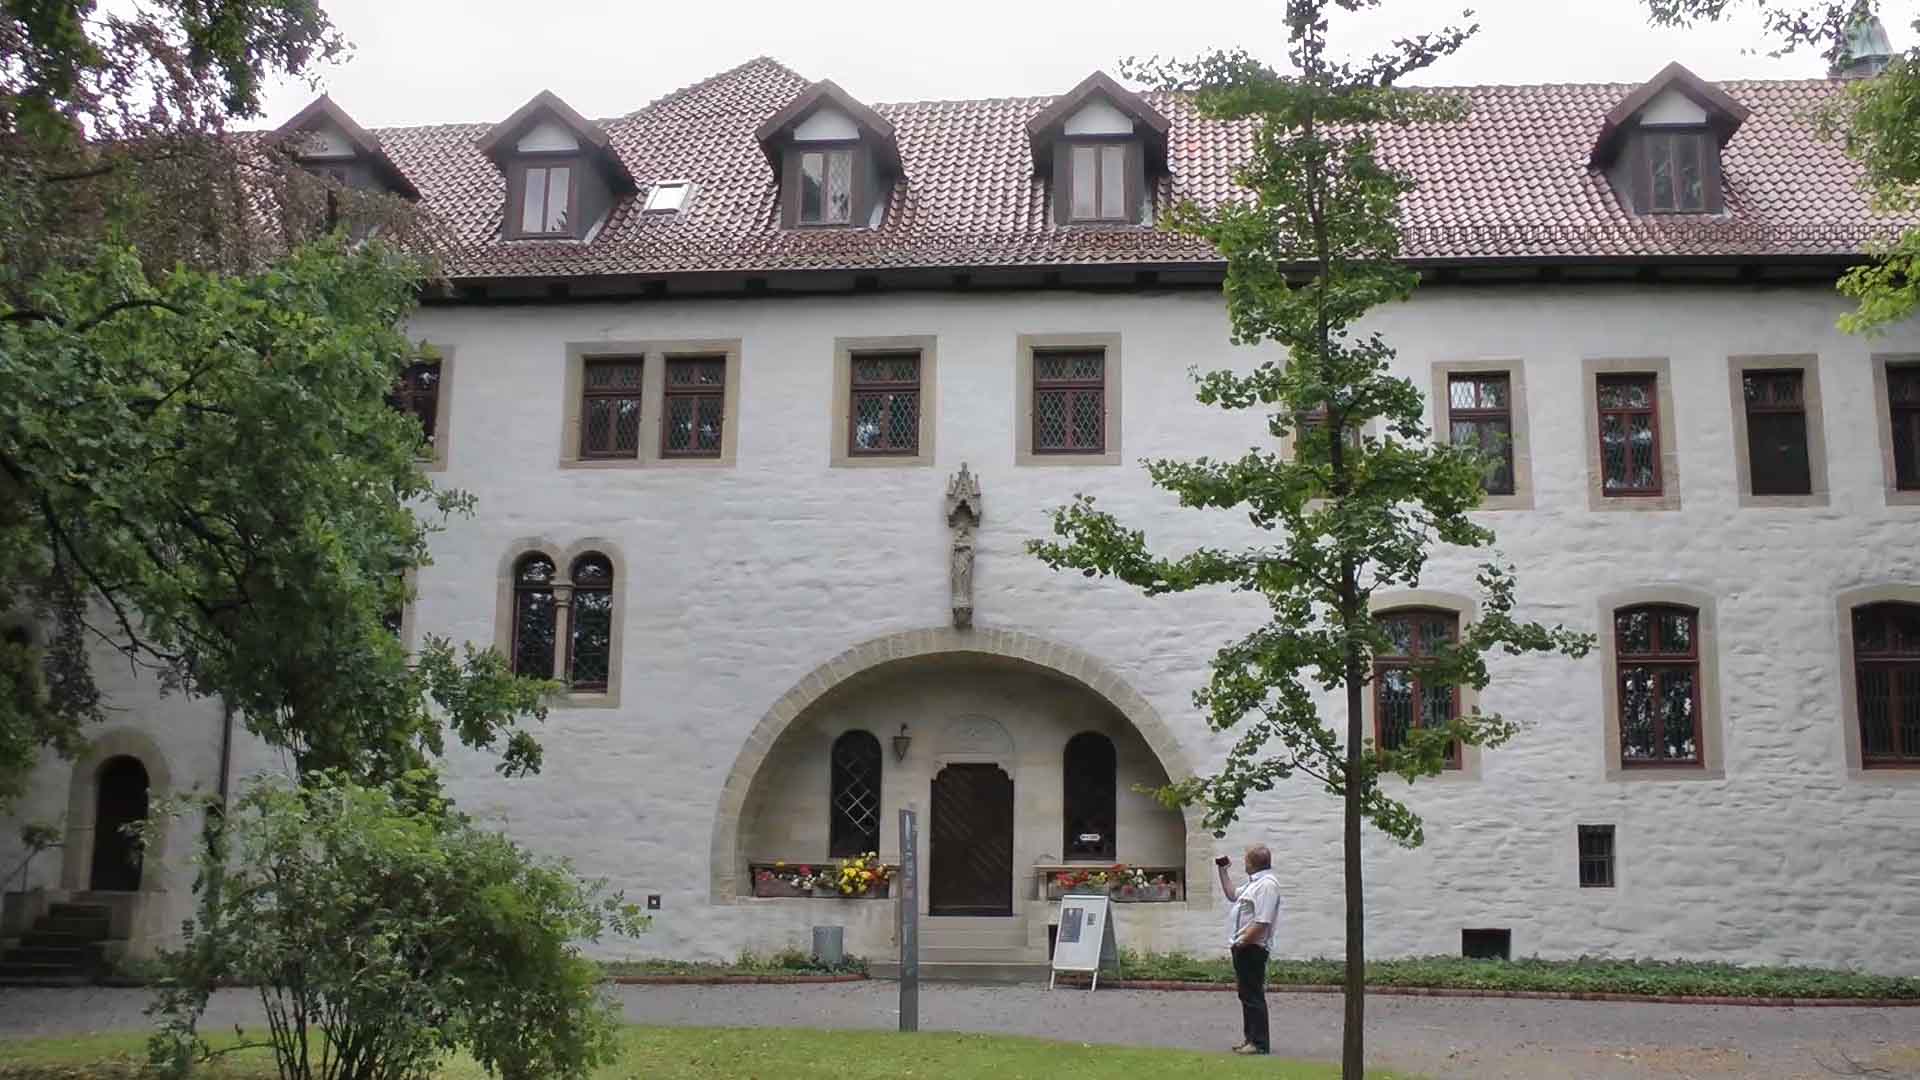 Kloster St. Marienberg